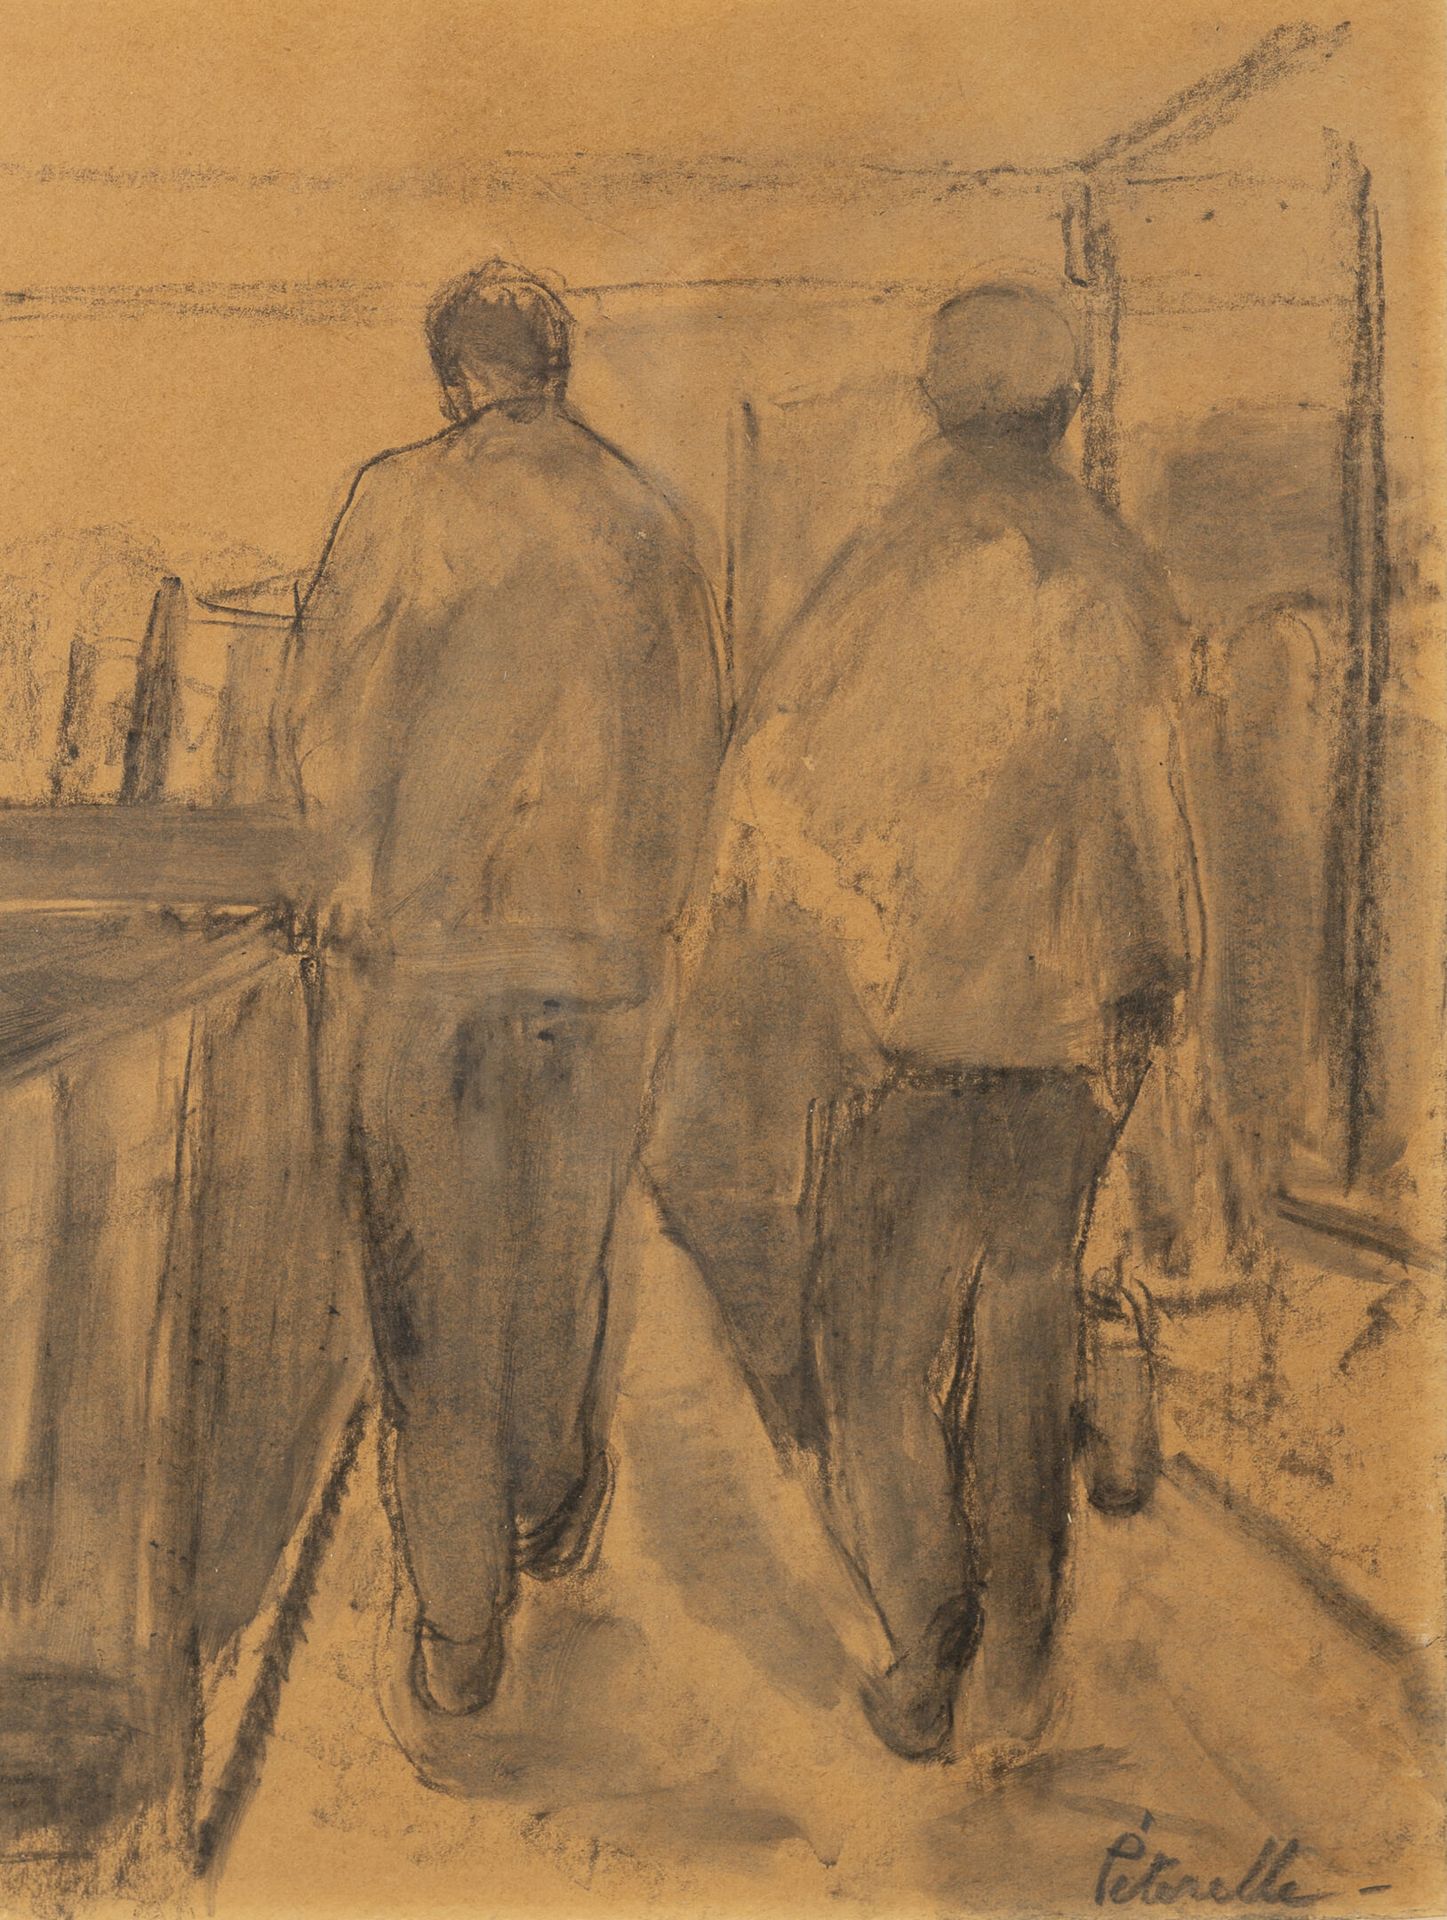 Adolphe PÉTERELLE (1874-1947) 从后面看到两个人物。

木炭和水洗。

右下方有签名。

31 x 23.5厘米。

纸张绝缘。

&hellip;